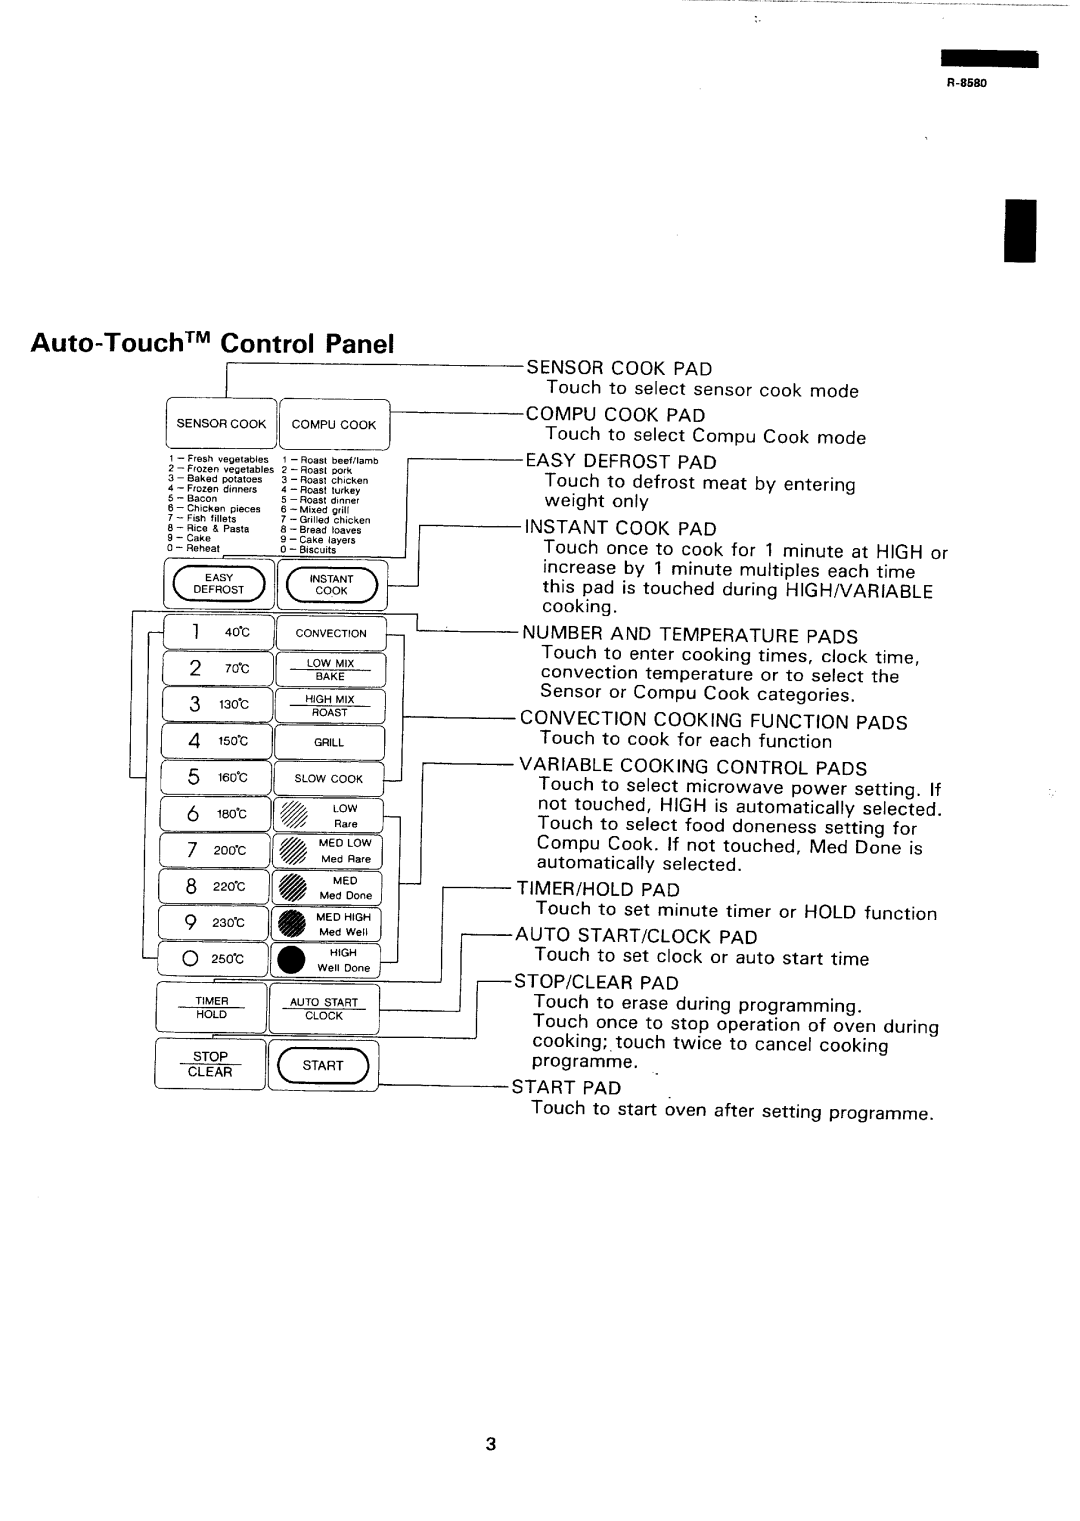 Sharp r-8580 manual Auto-TouchTMControl Panel 